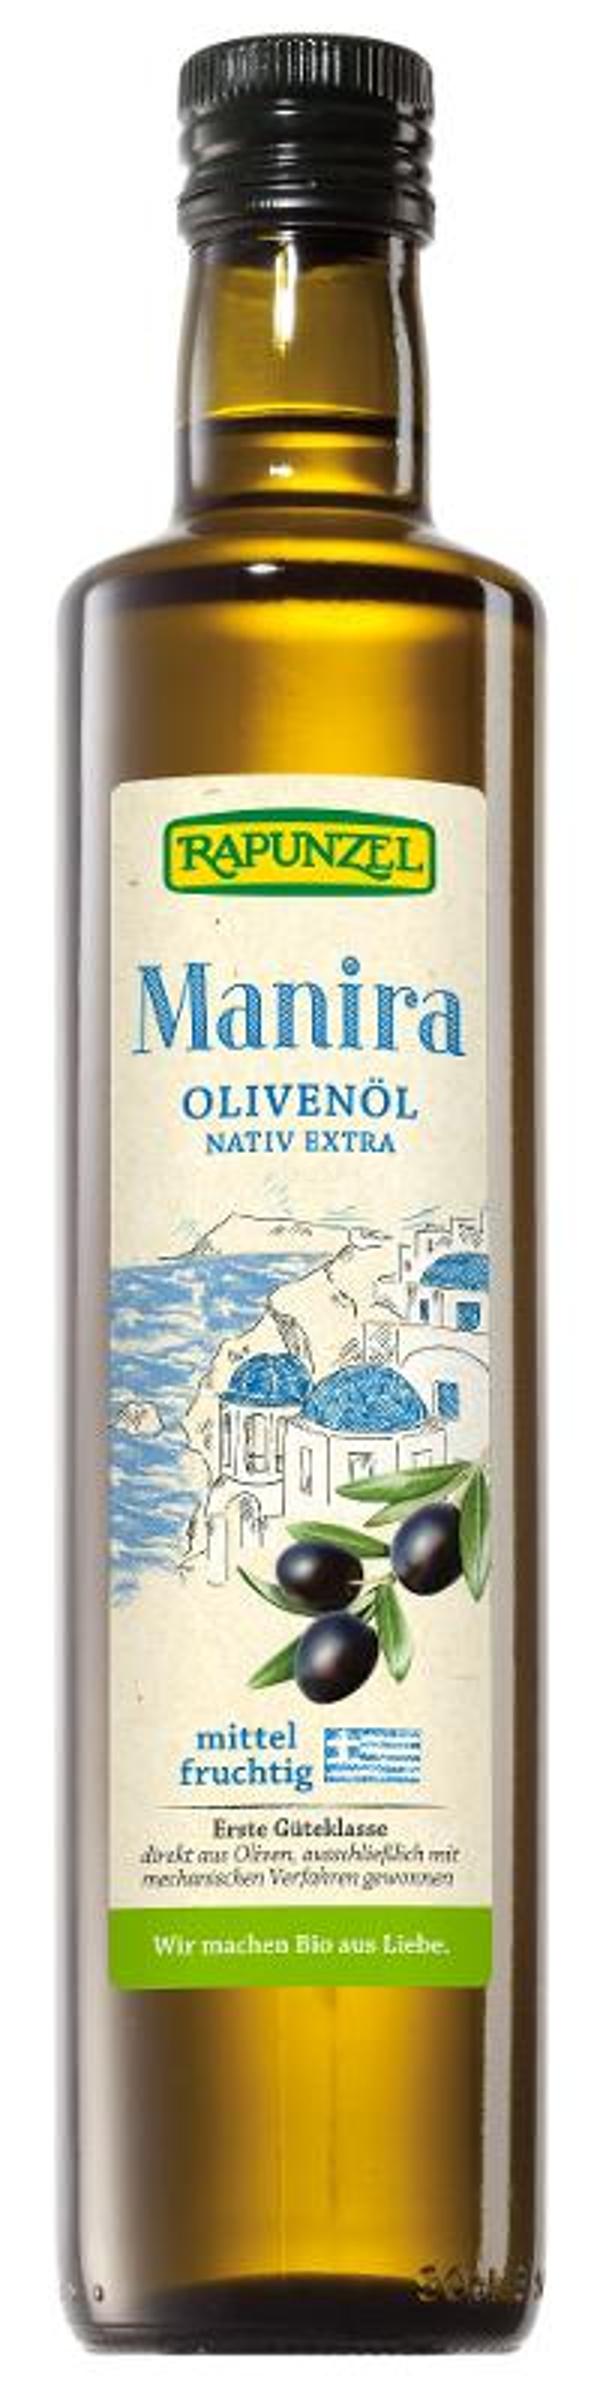 Produktfoto zu Olivenöl Manira